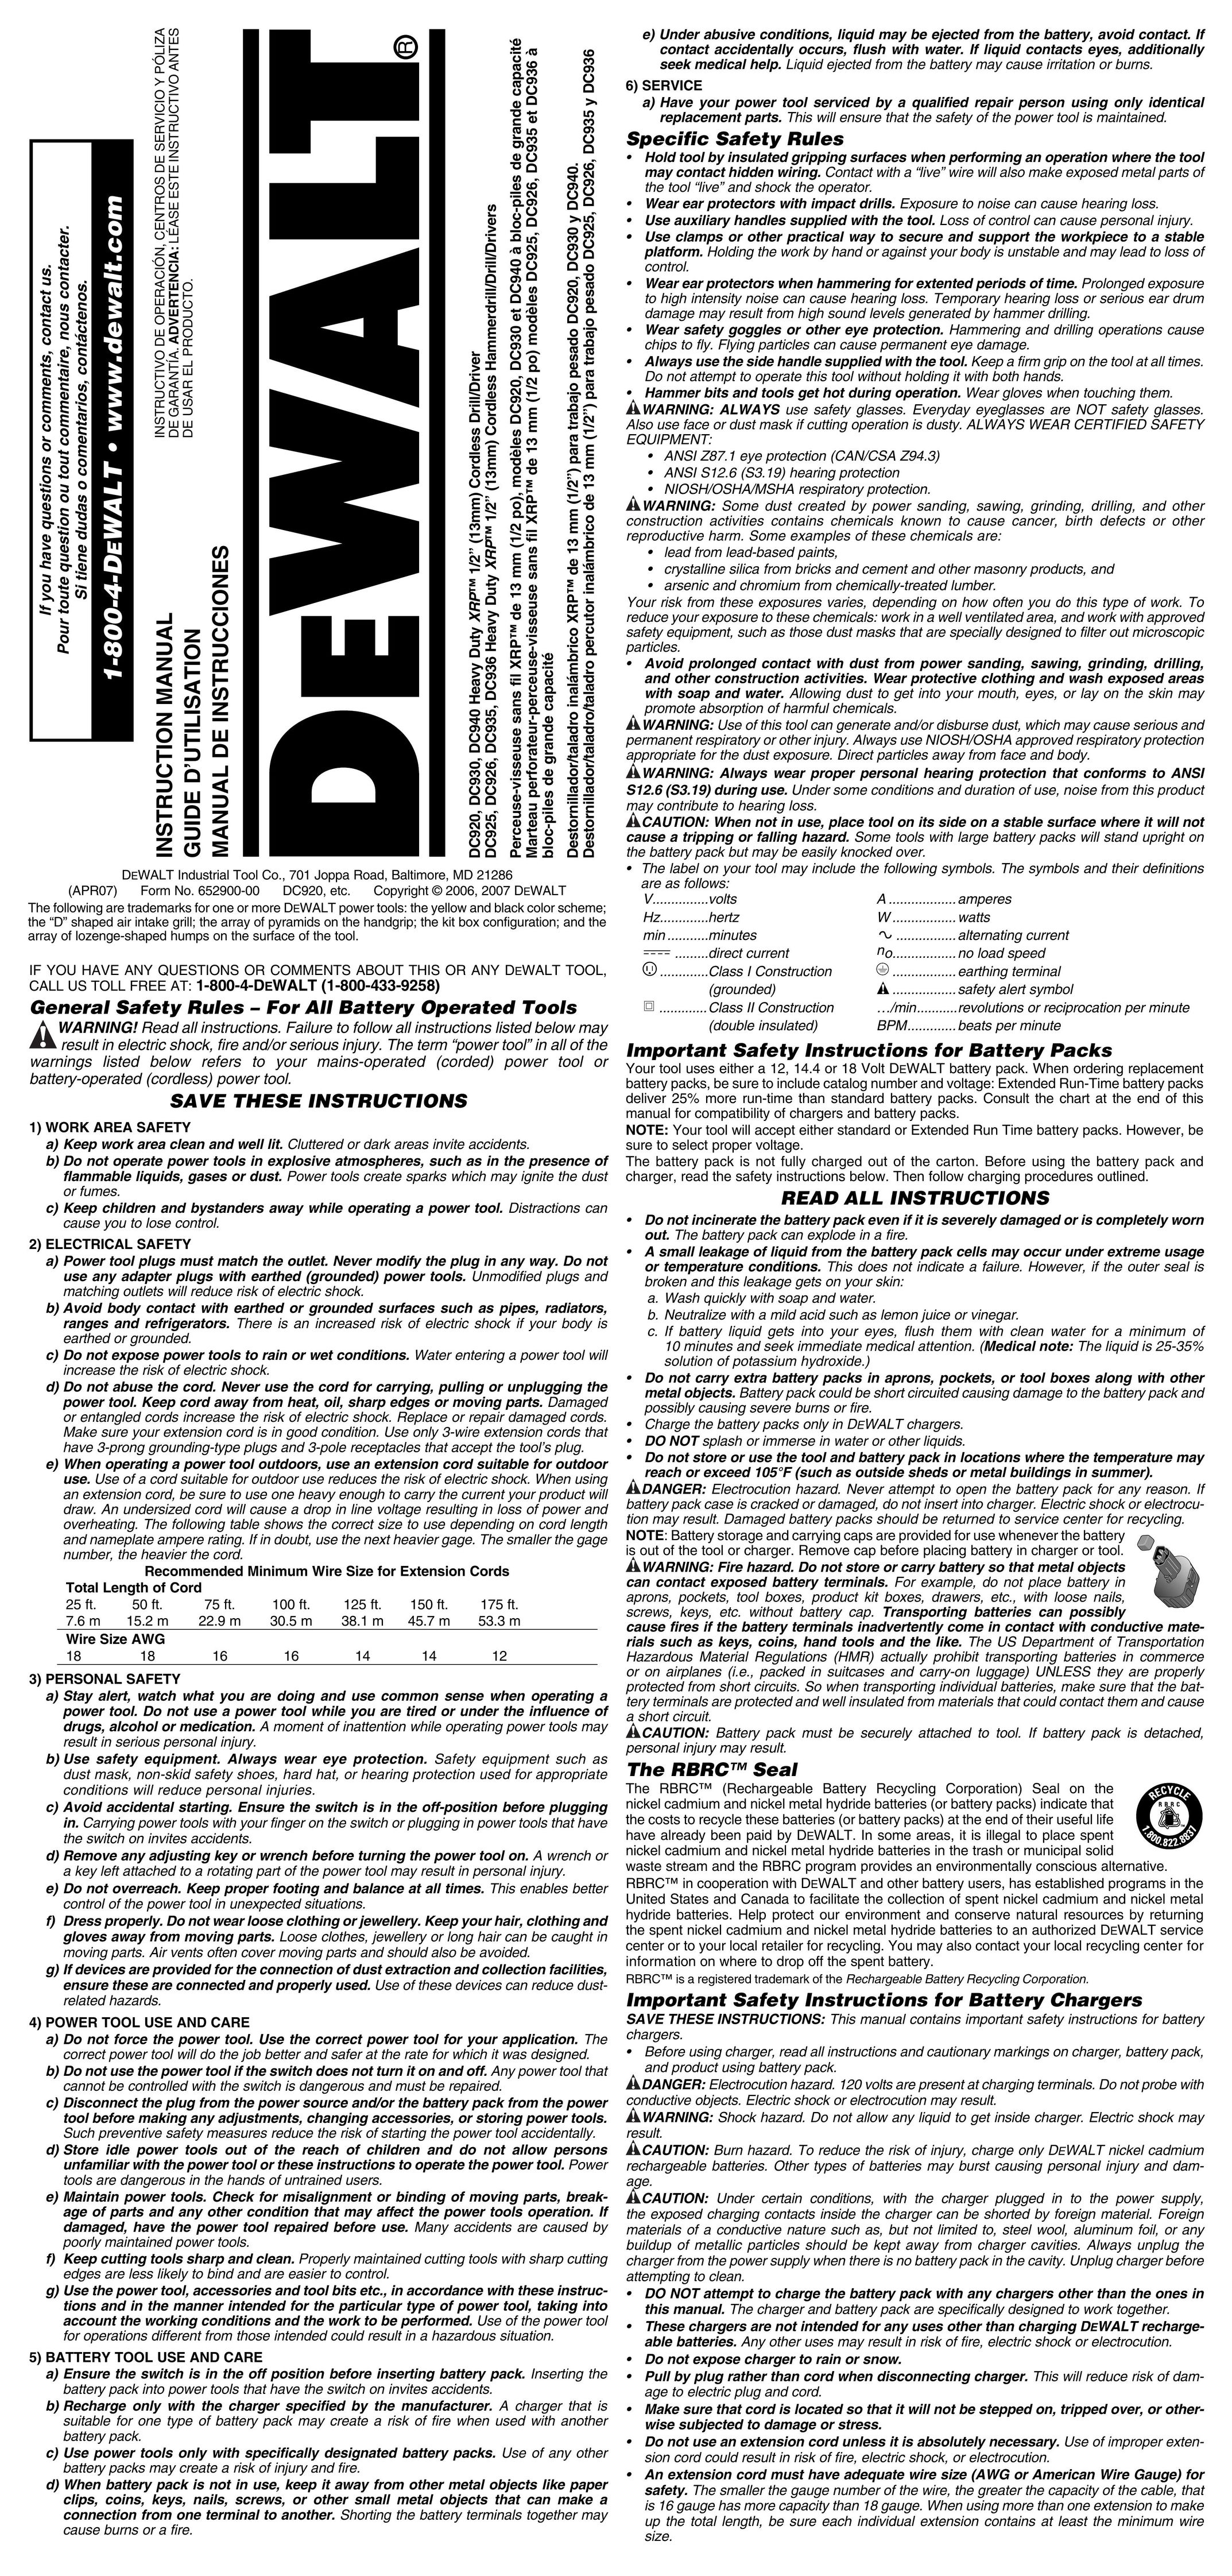 DeWalt DC920 Cordless Drill User Manual